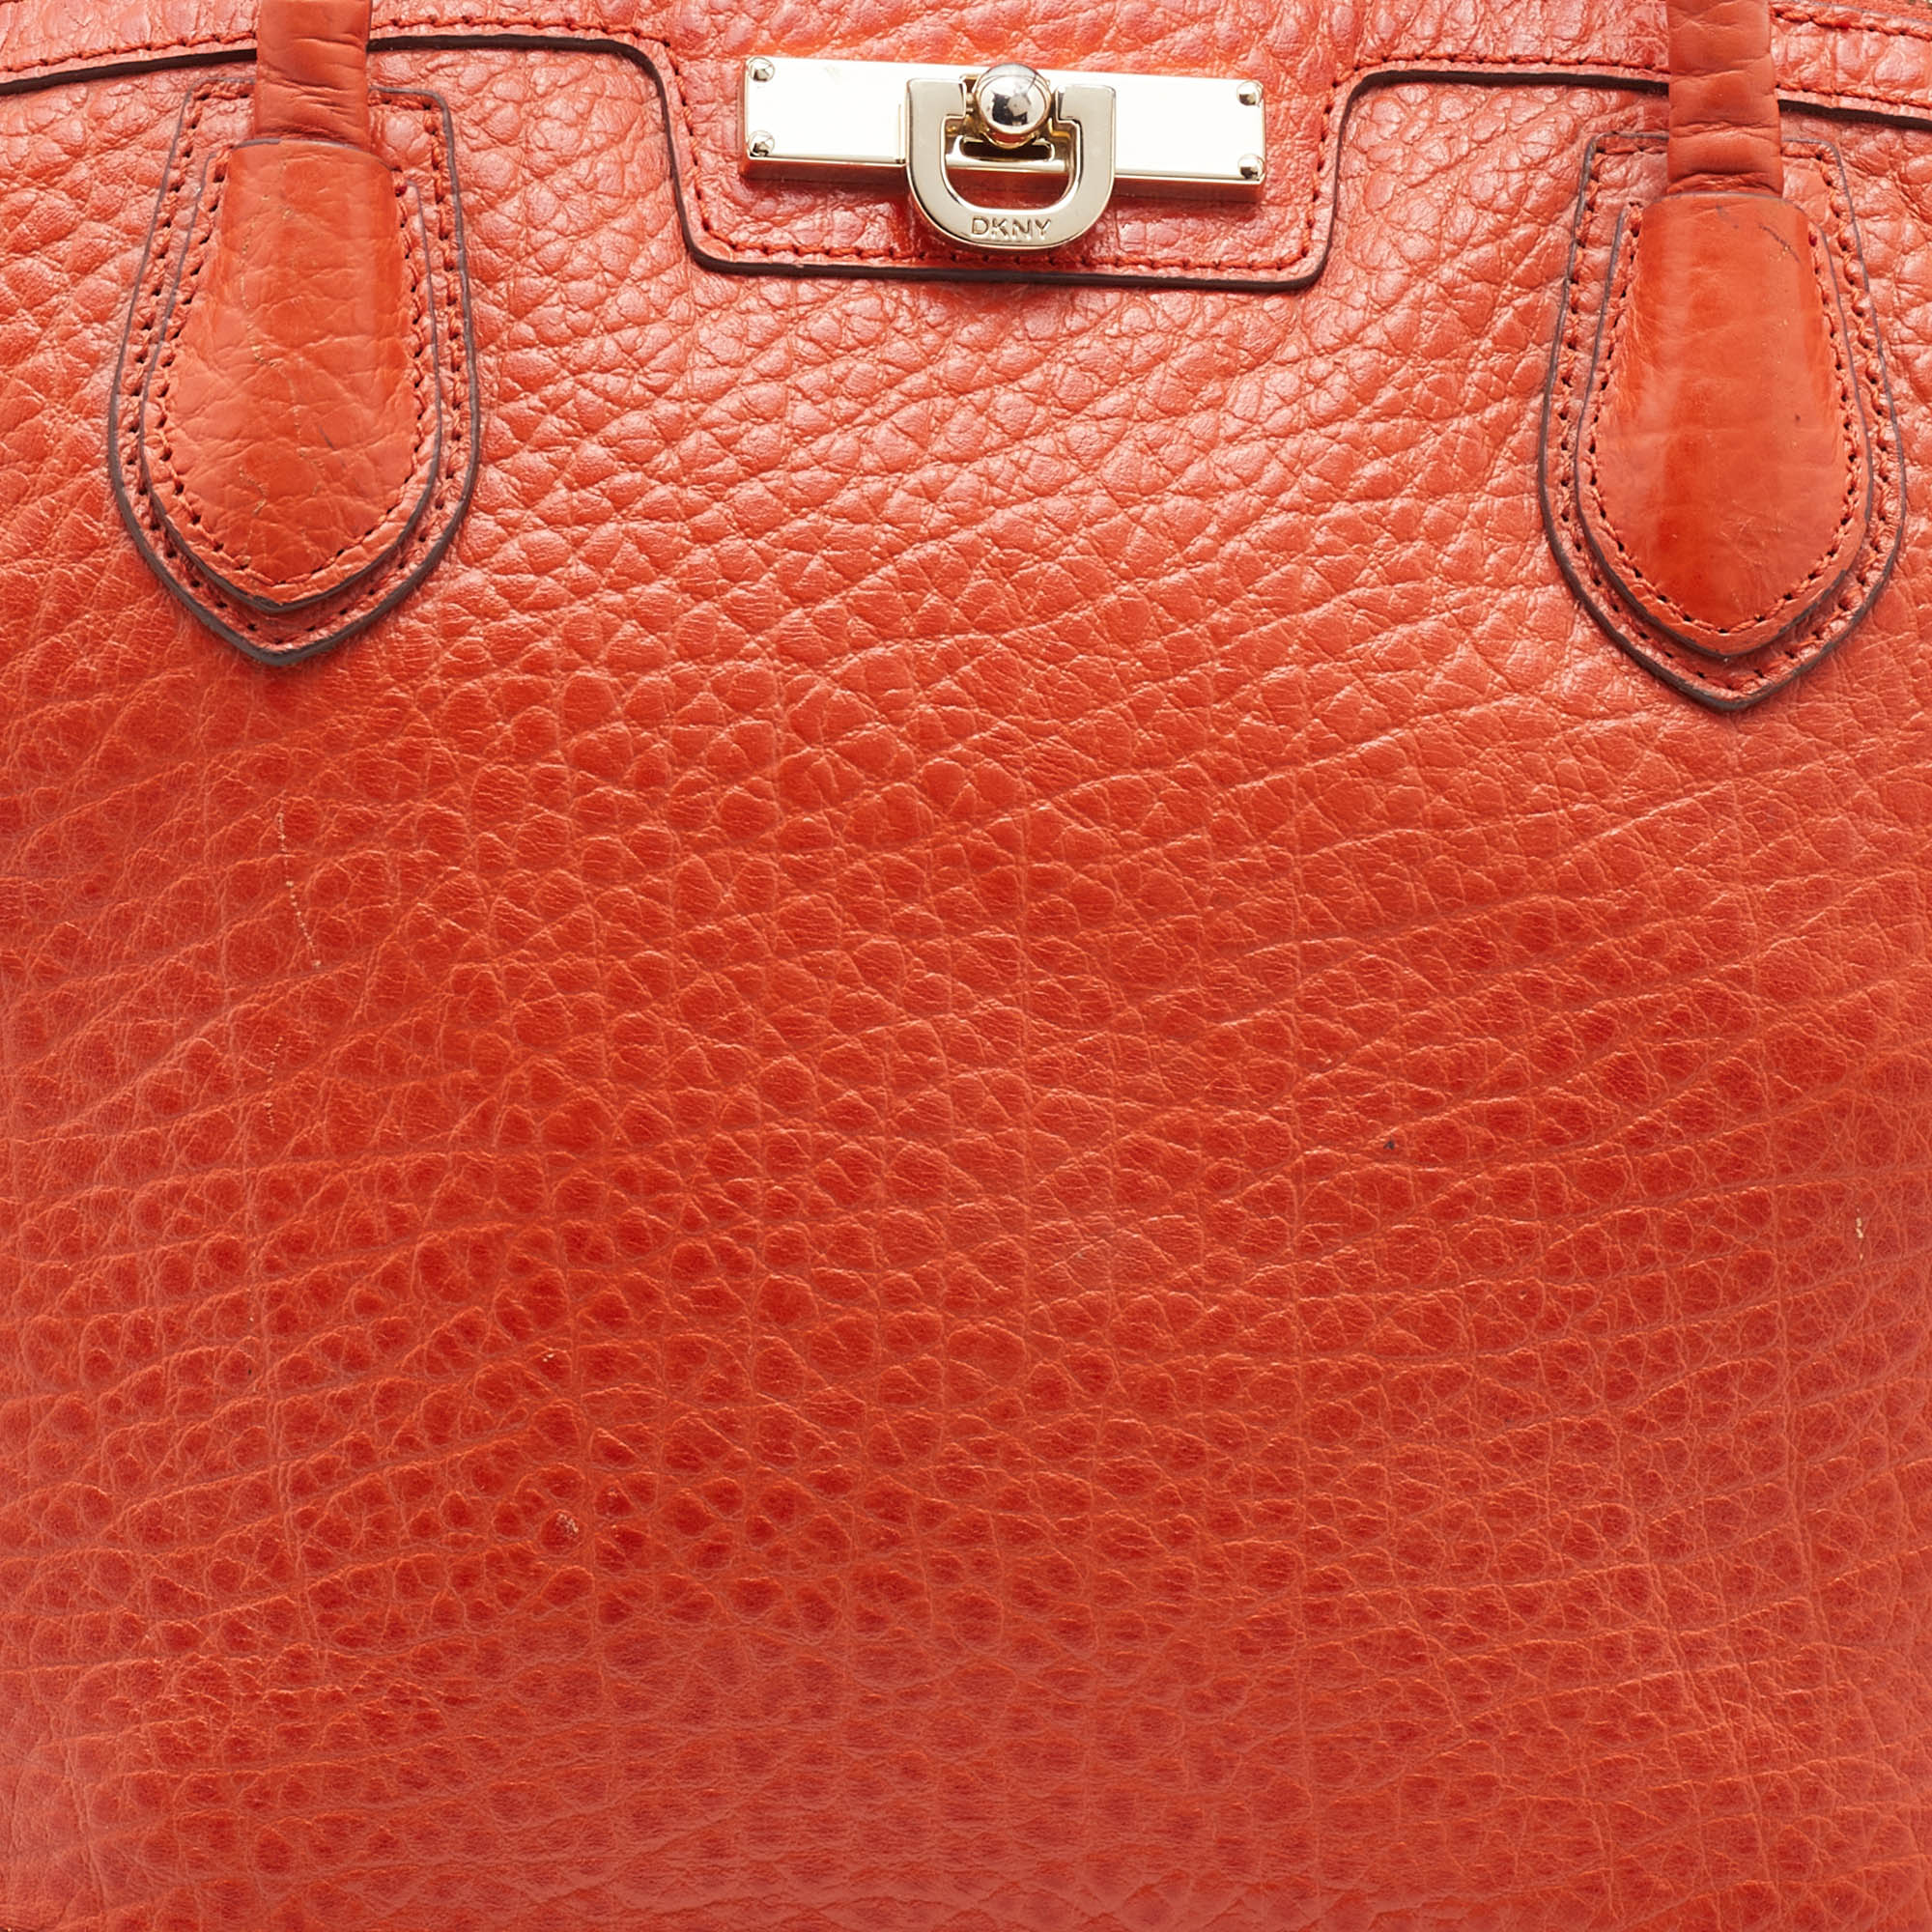 DKNY Orange Leather Top Zip Tote